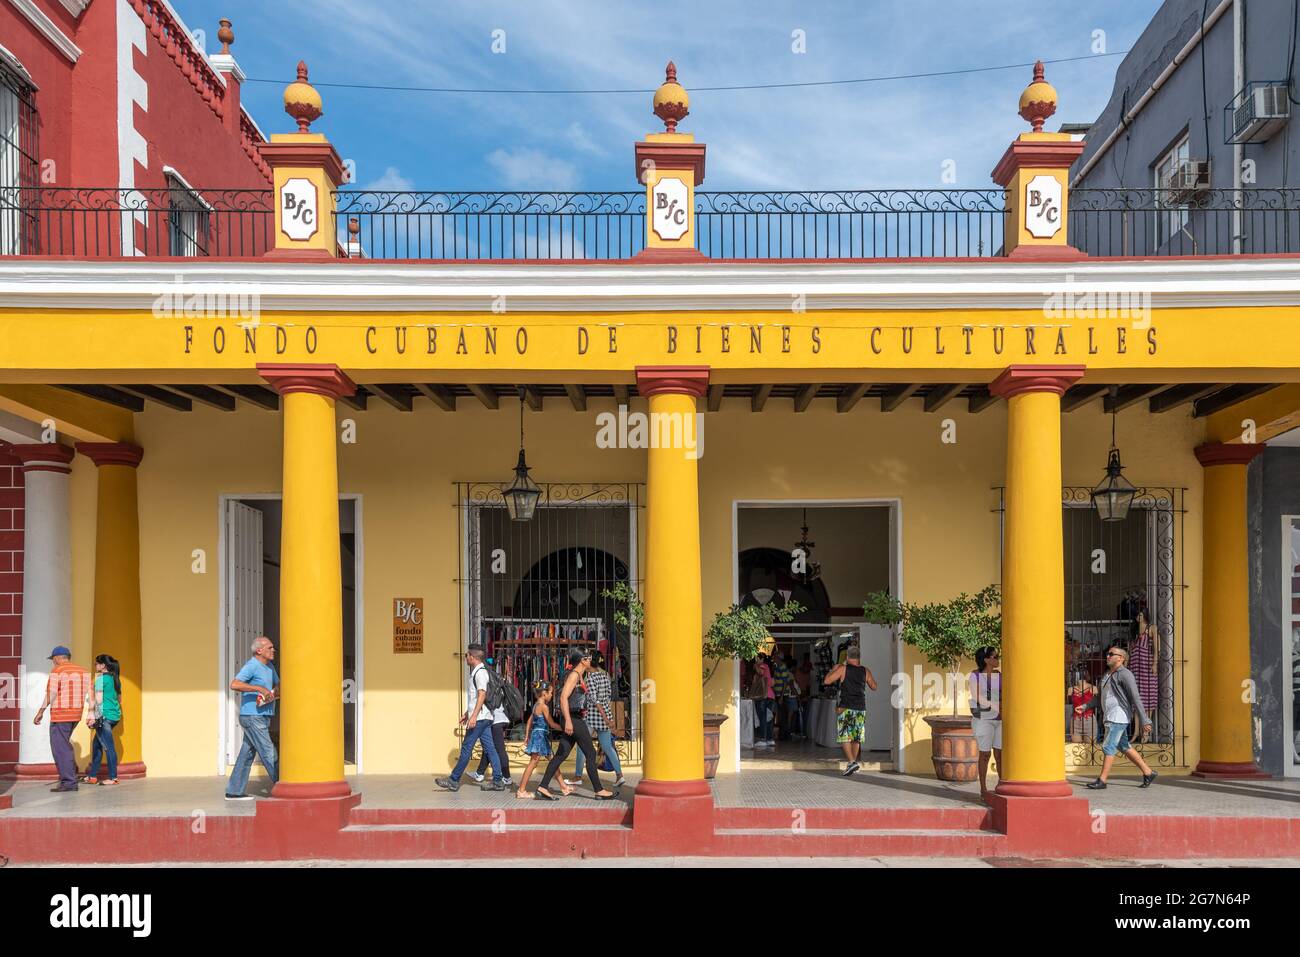 Cuban people in colonial porch building, Holguin, Cuba, 2016 Stock Photo